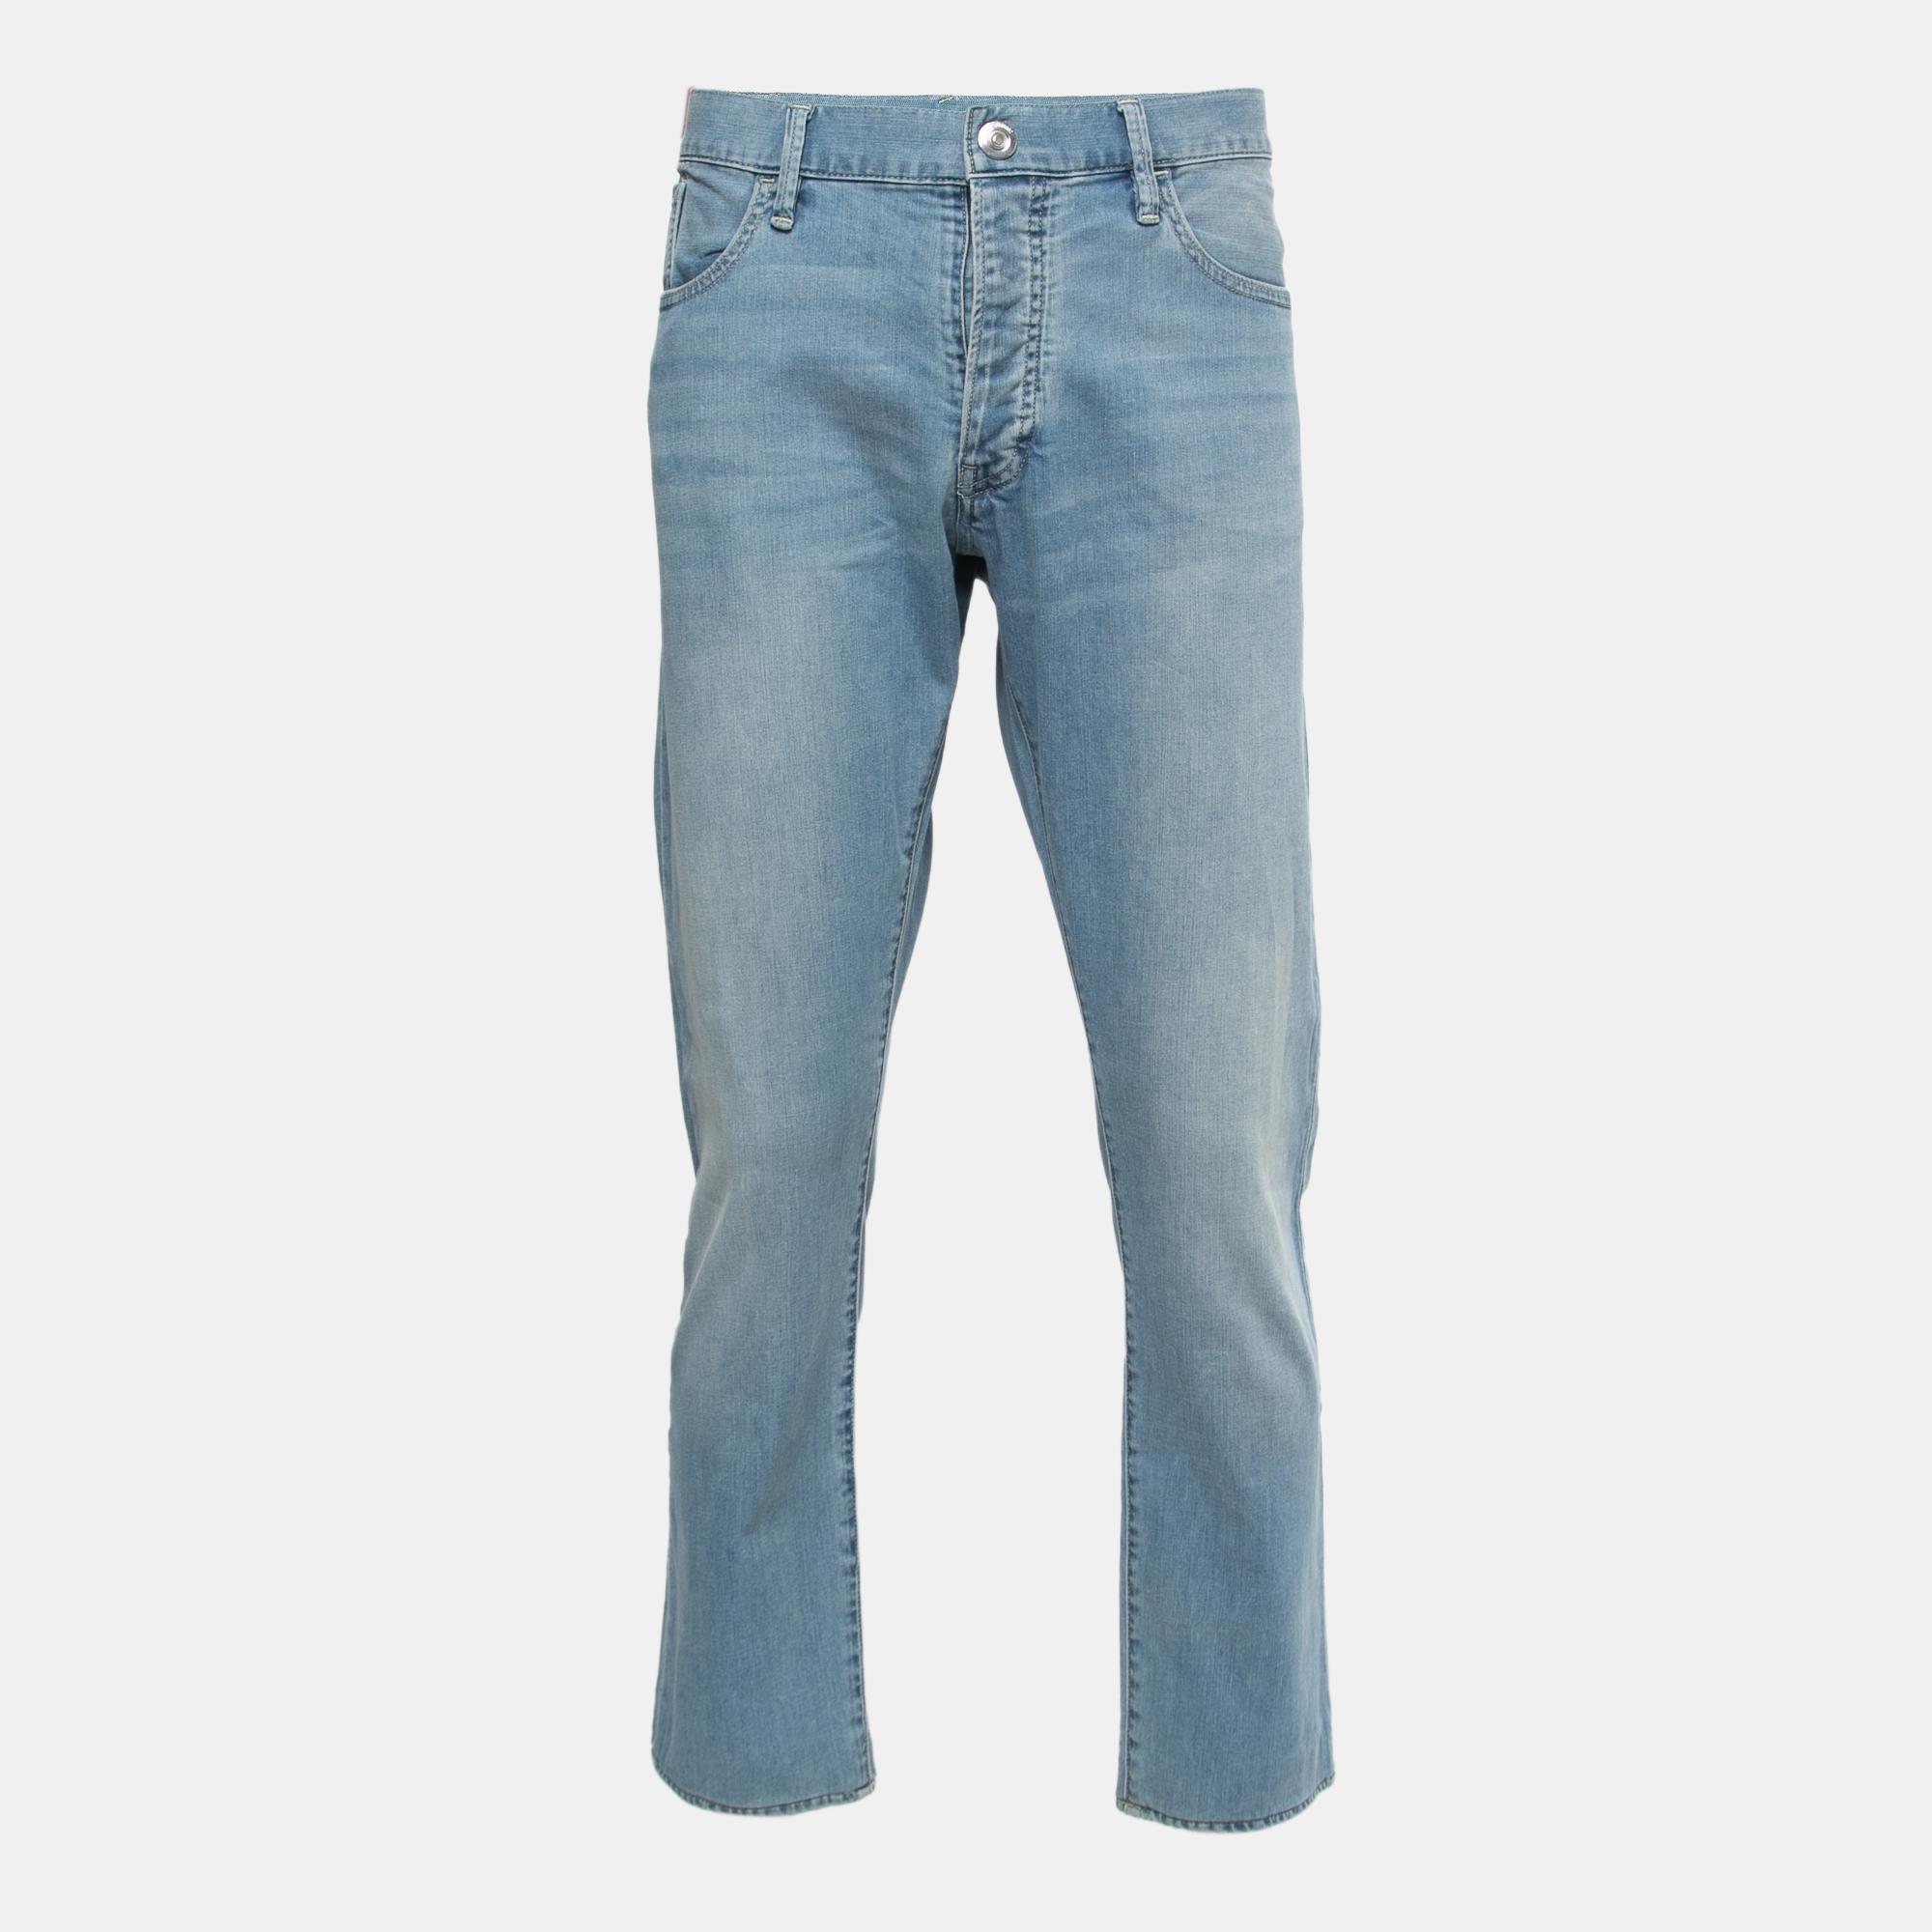 Emporio armani blue denim tapered fit  jeans xxl/waist 41"